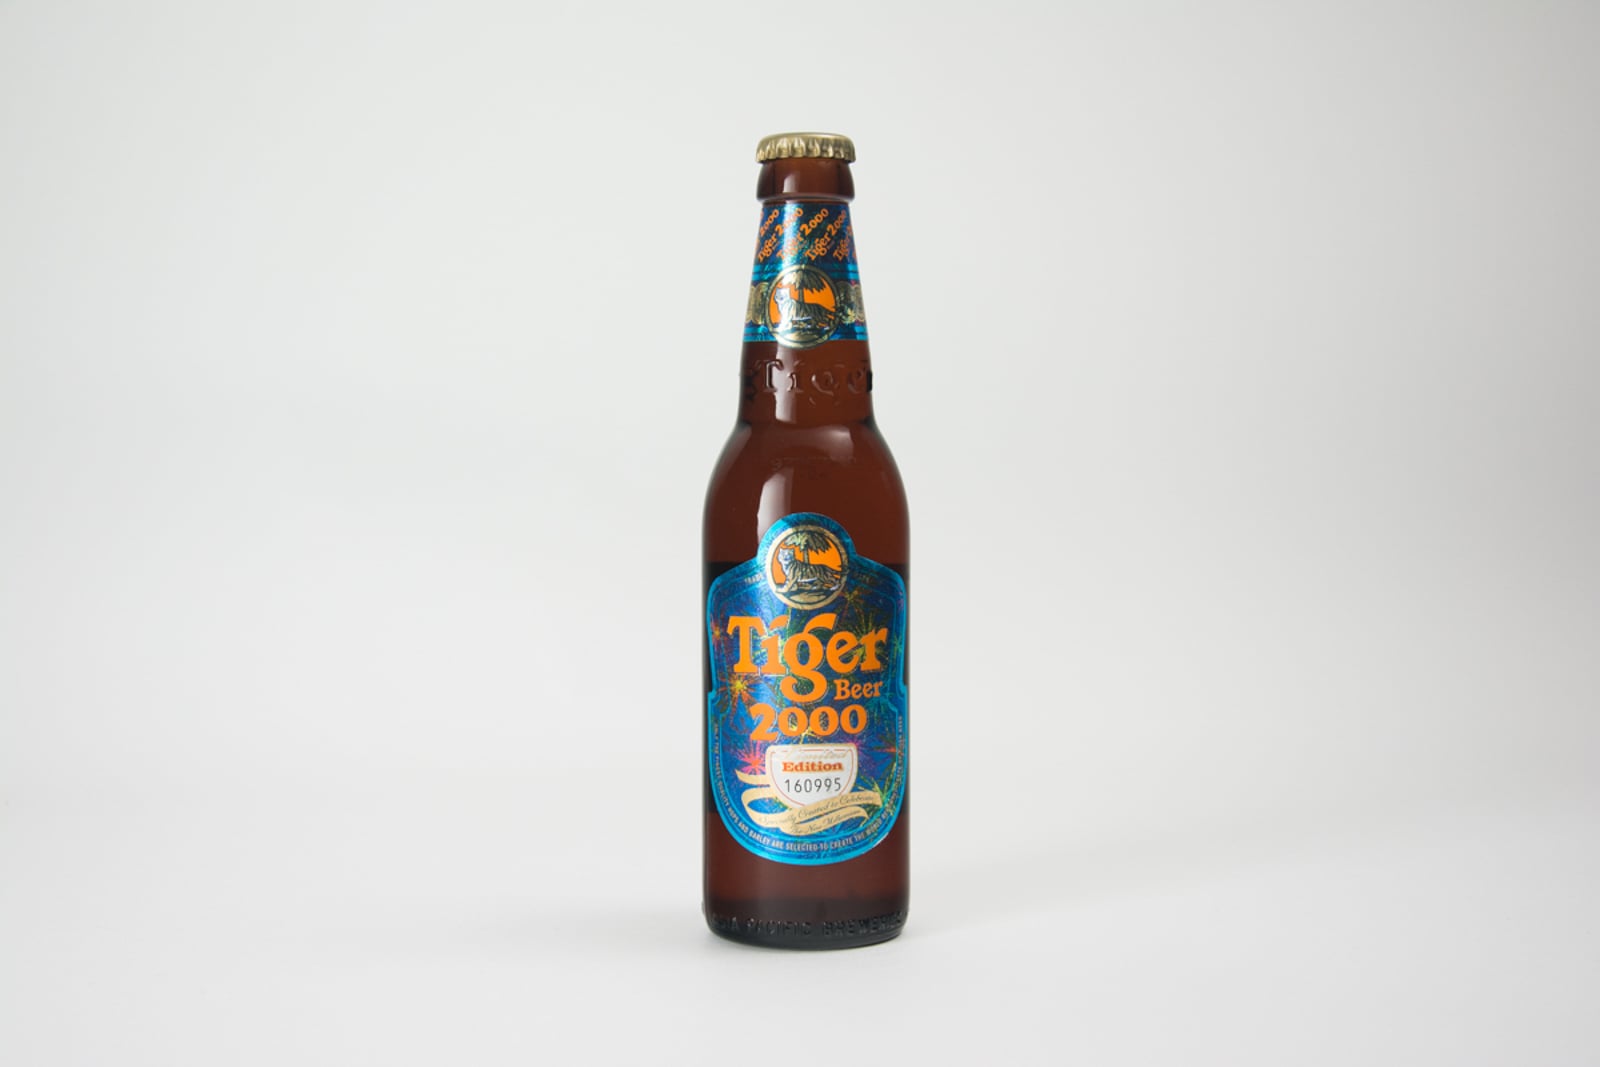 Tiger Beer 2000 Limited Edition Bottle, 330 ml